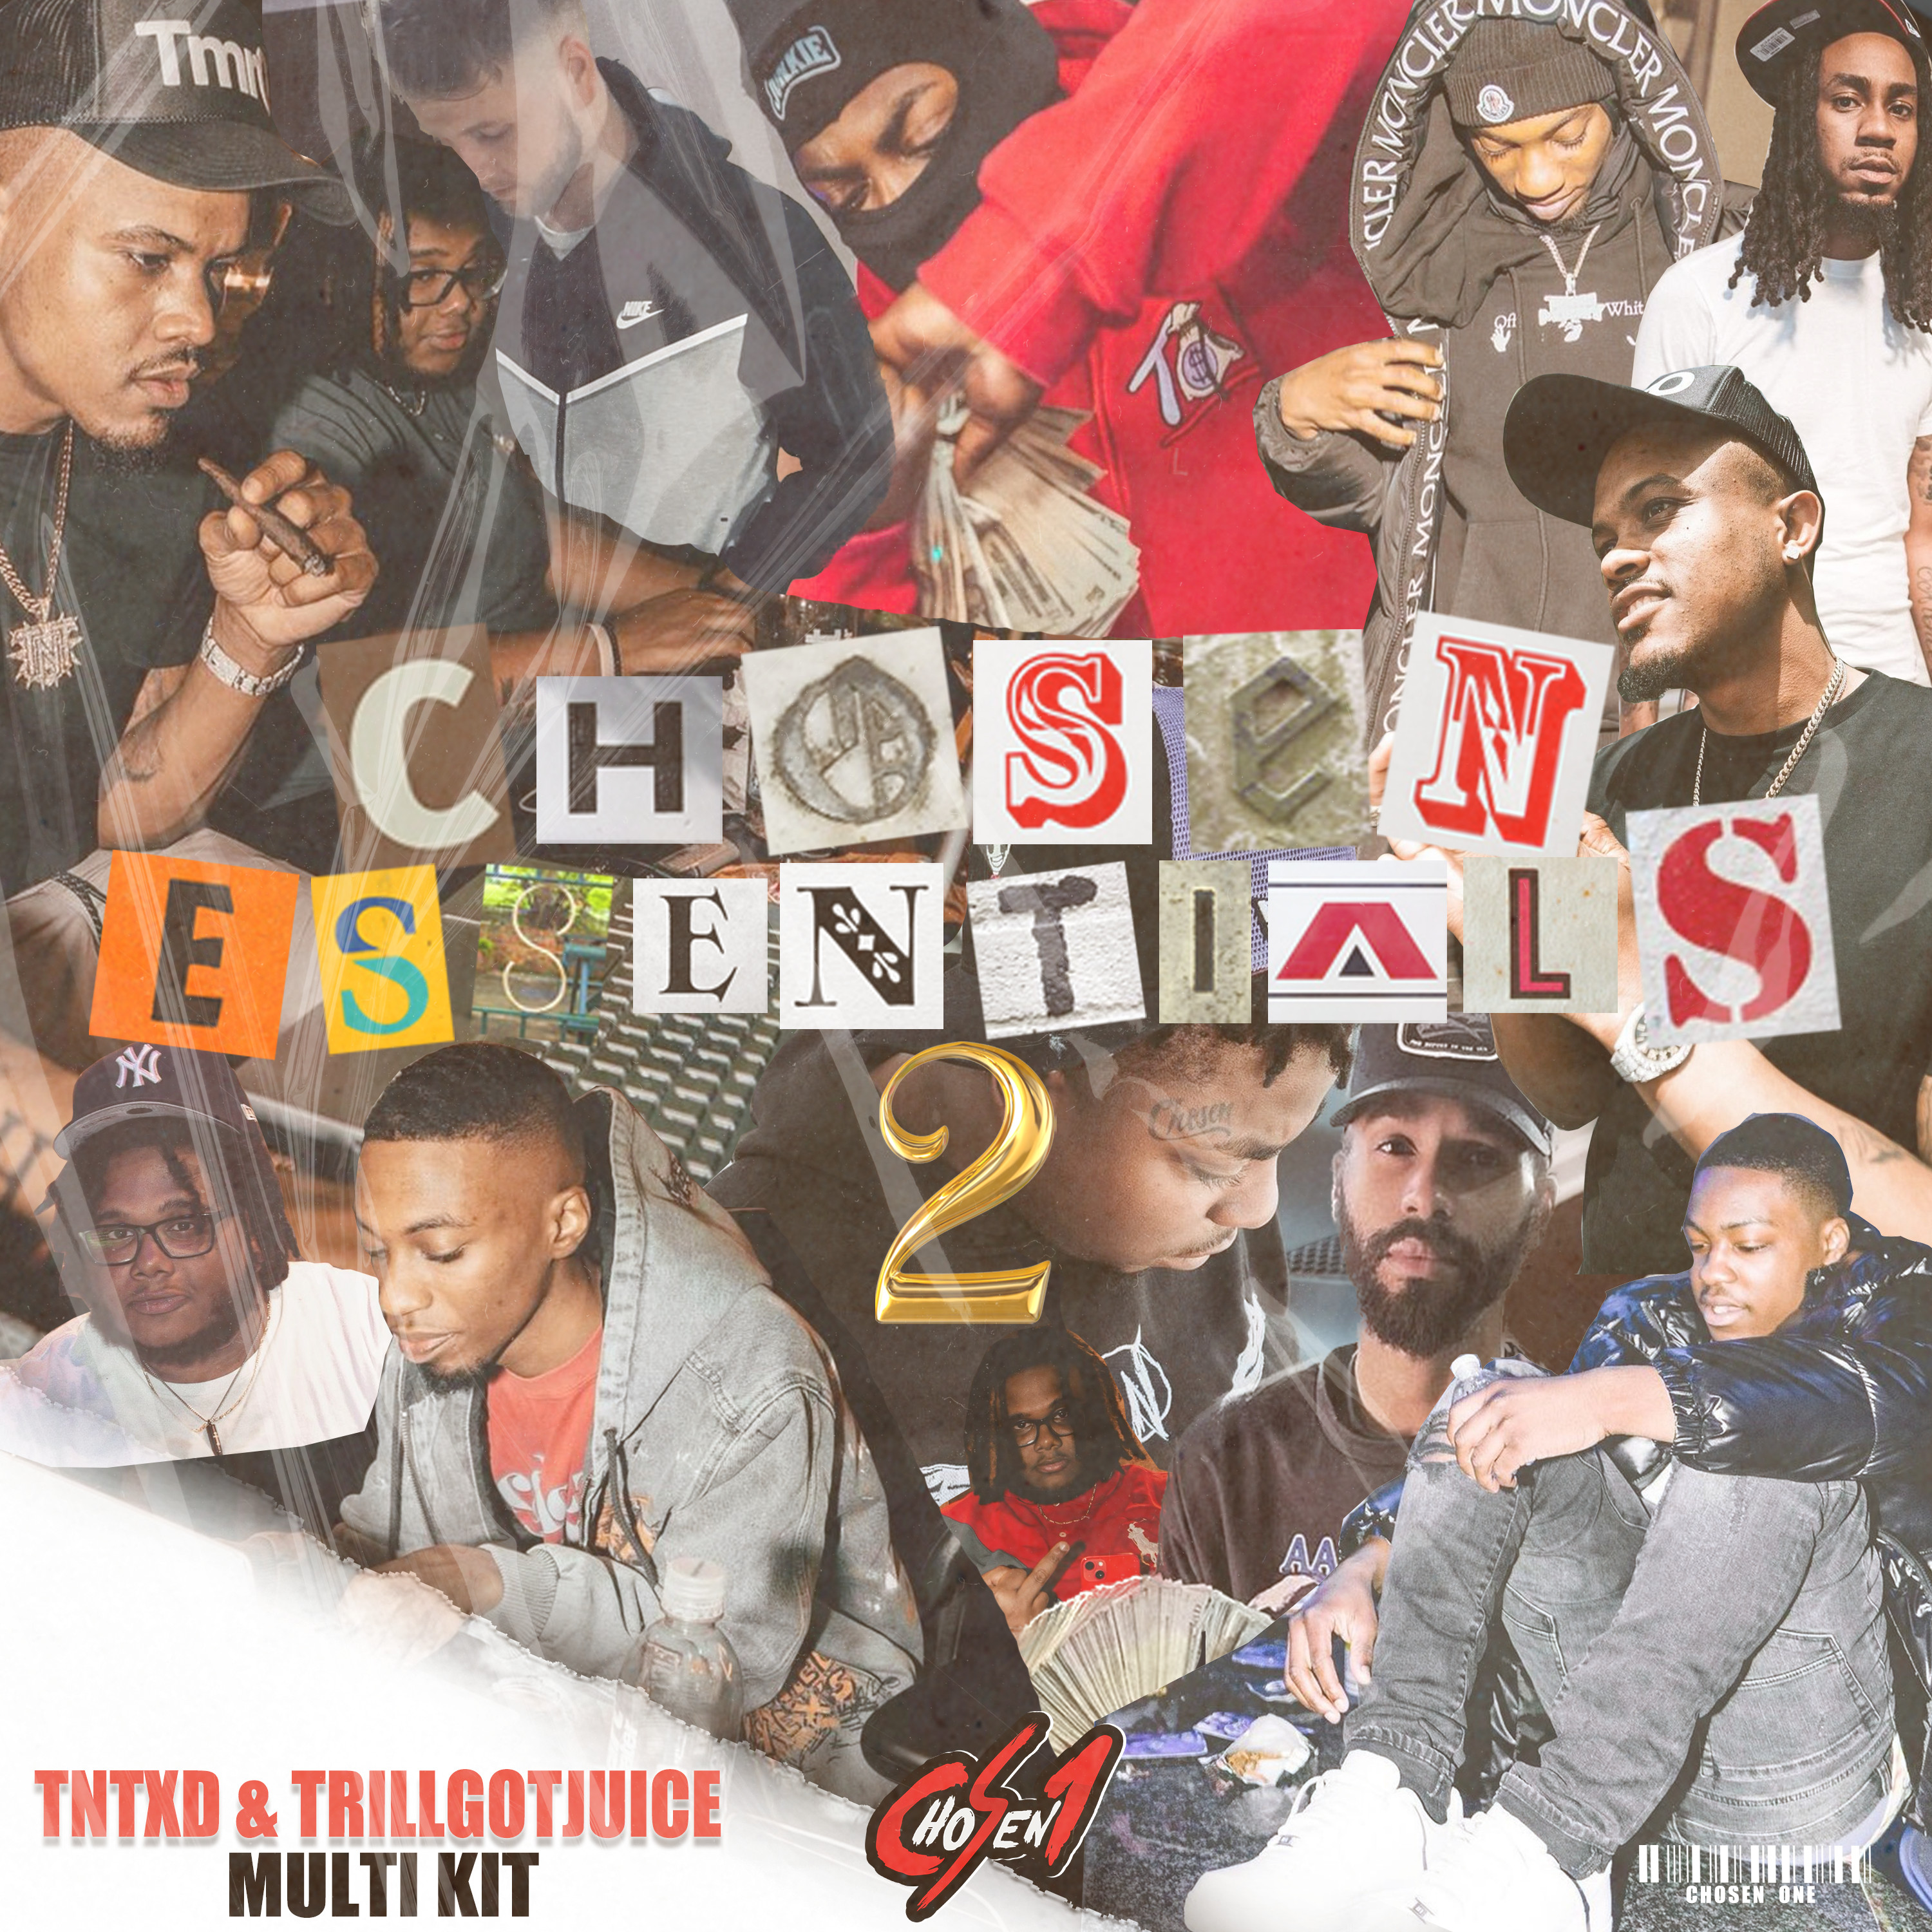 TnTXD & TrillGotJuice - Chosen Essentials Vol.2 Soundkit !